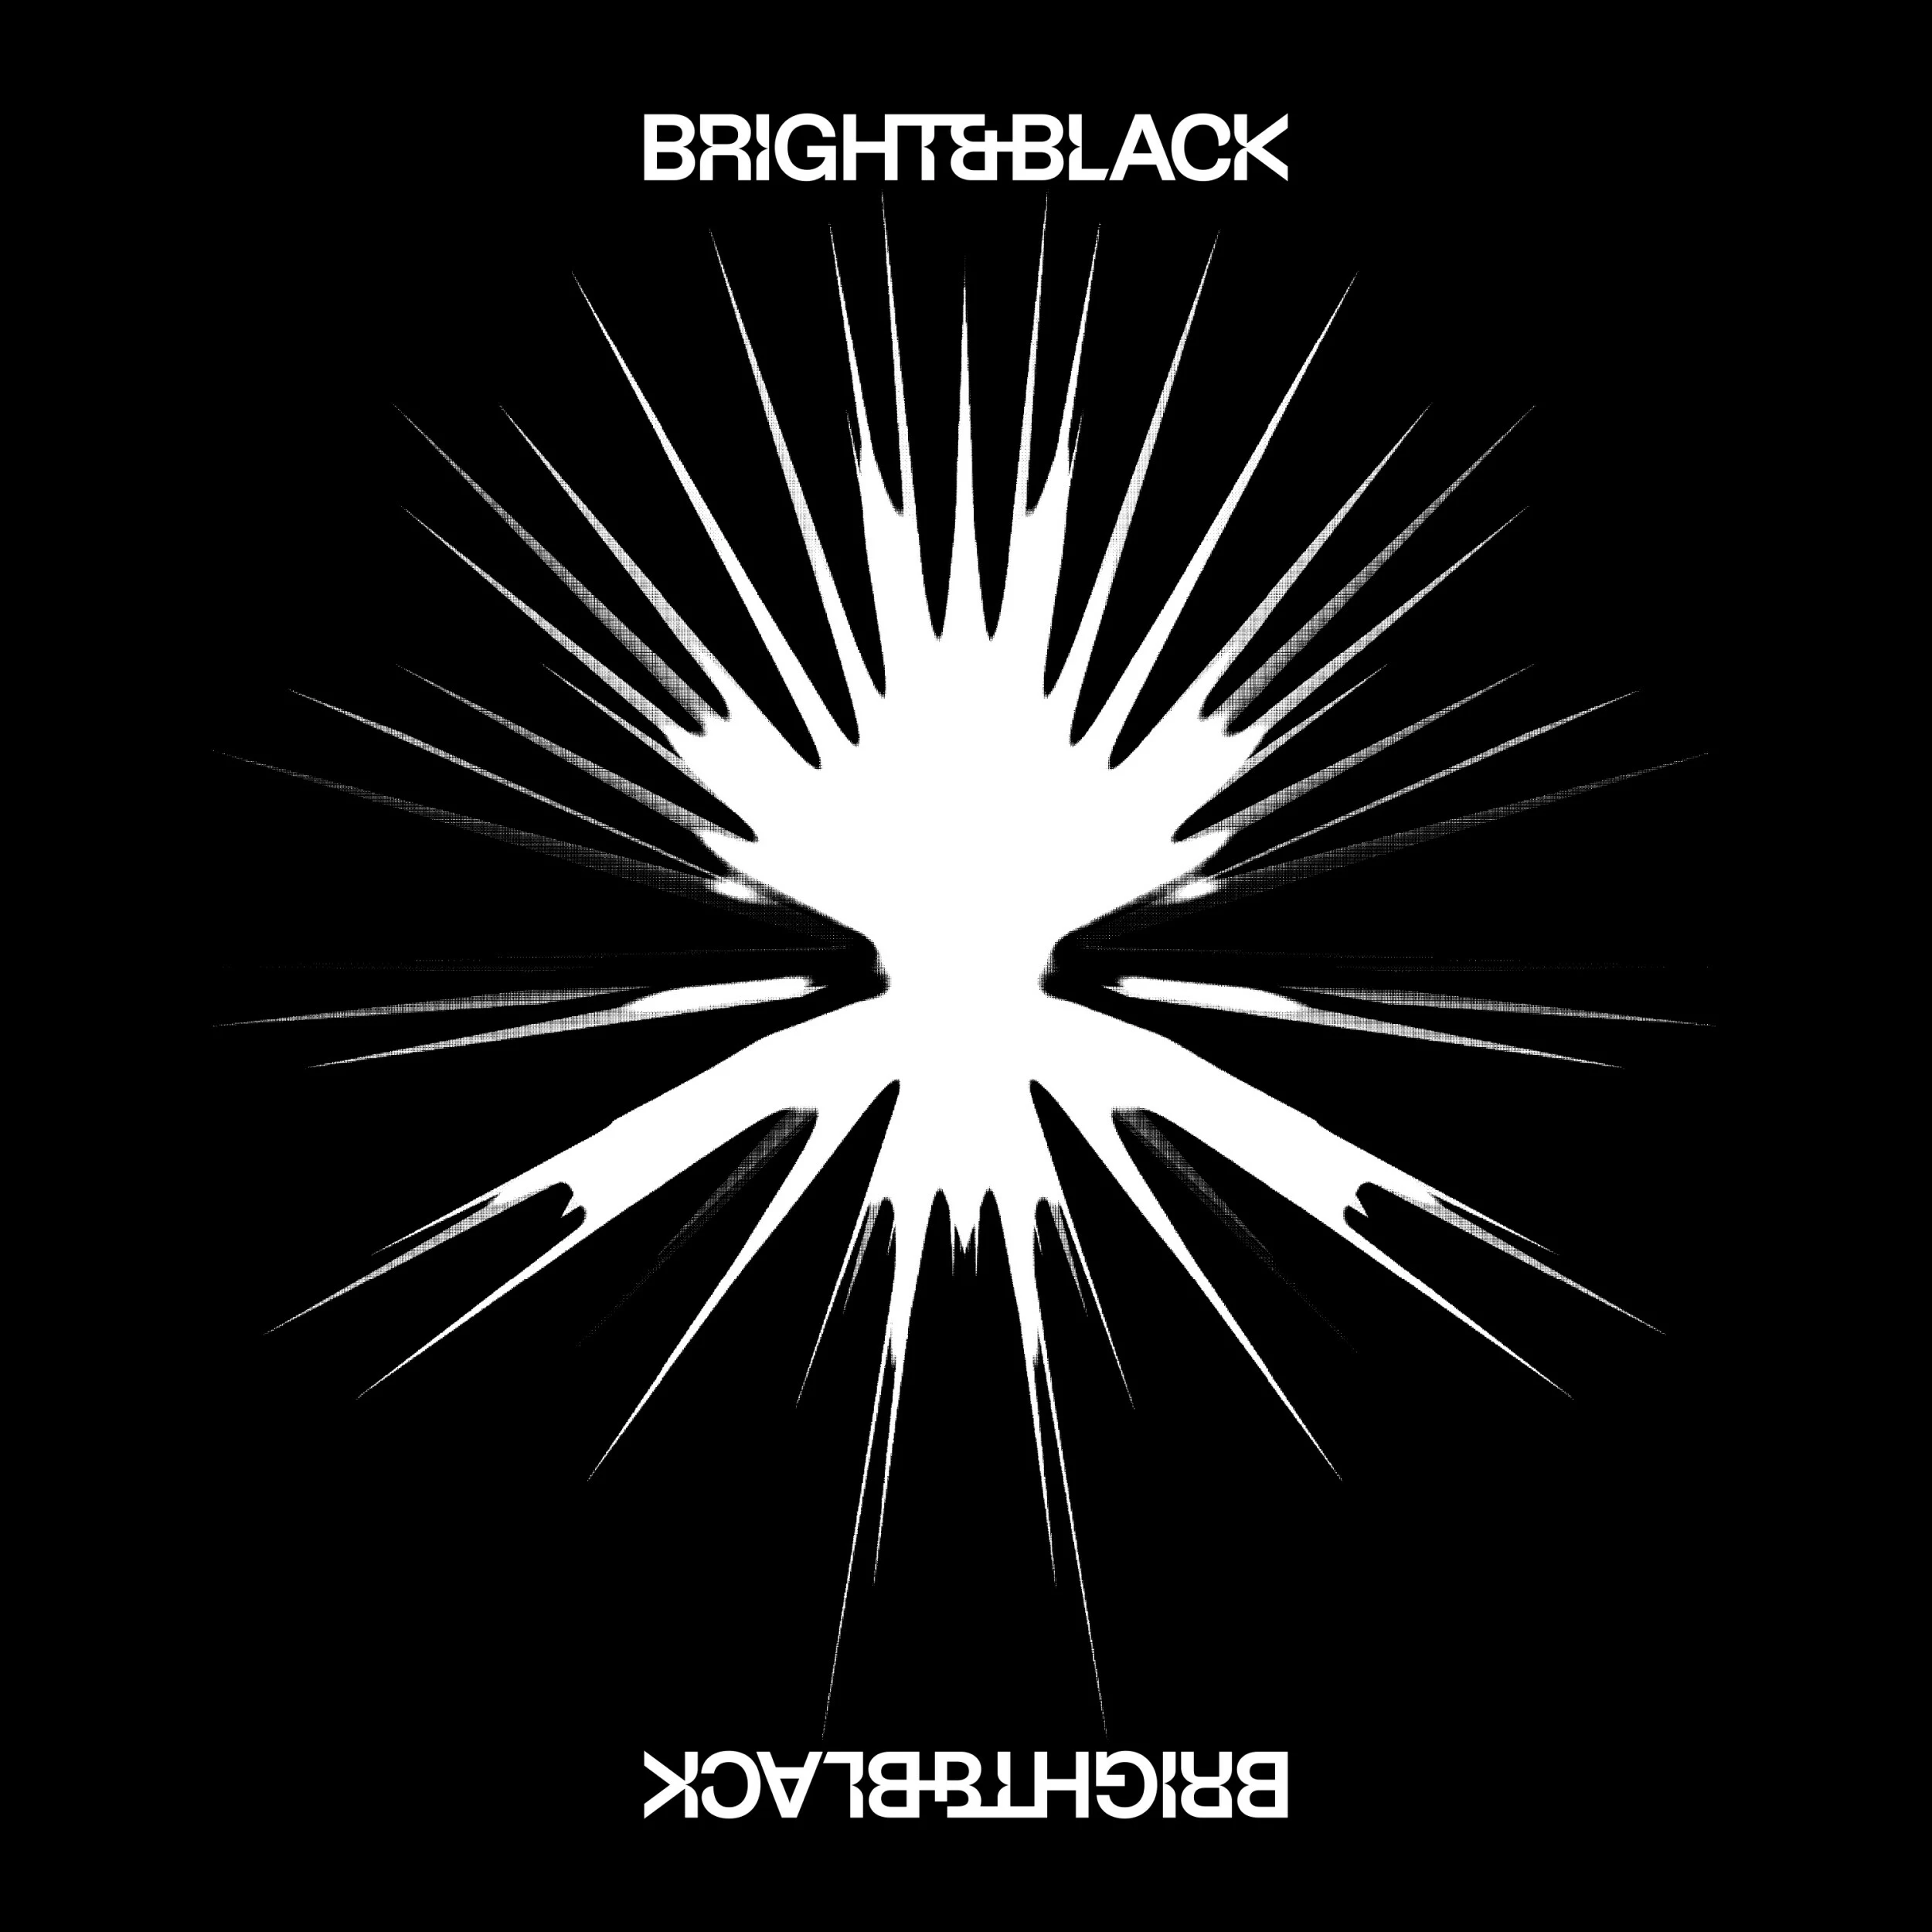 BRIGHT & BLACK FEAT. EICCA TOPPINEN/KRISTIAN JÄRVI/BALTIC SEA PHILHARMONIC - The Album [DIGIPAK CD]